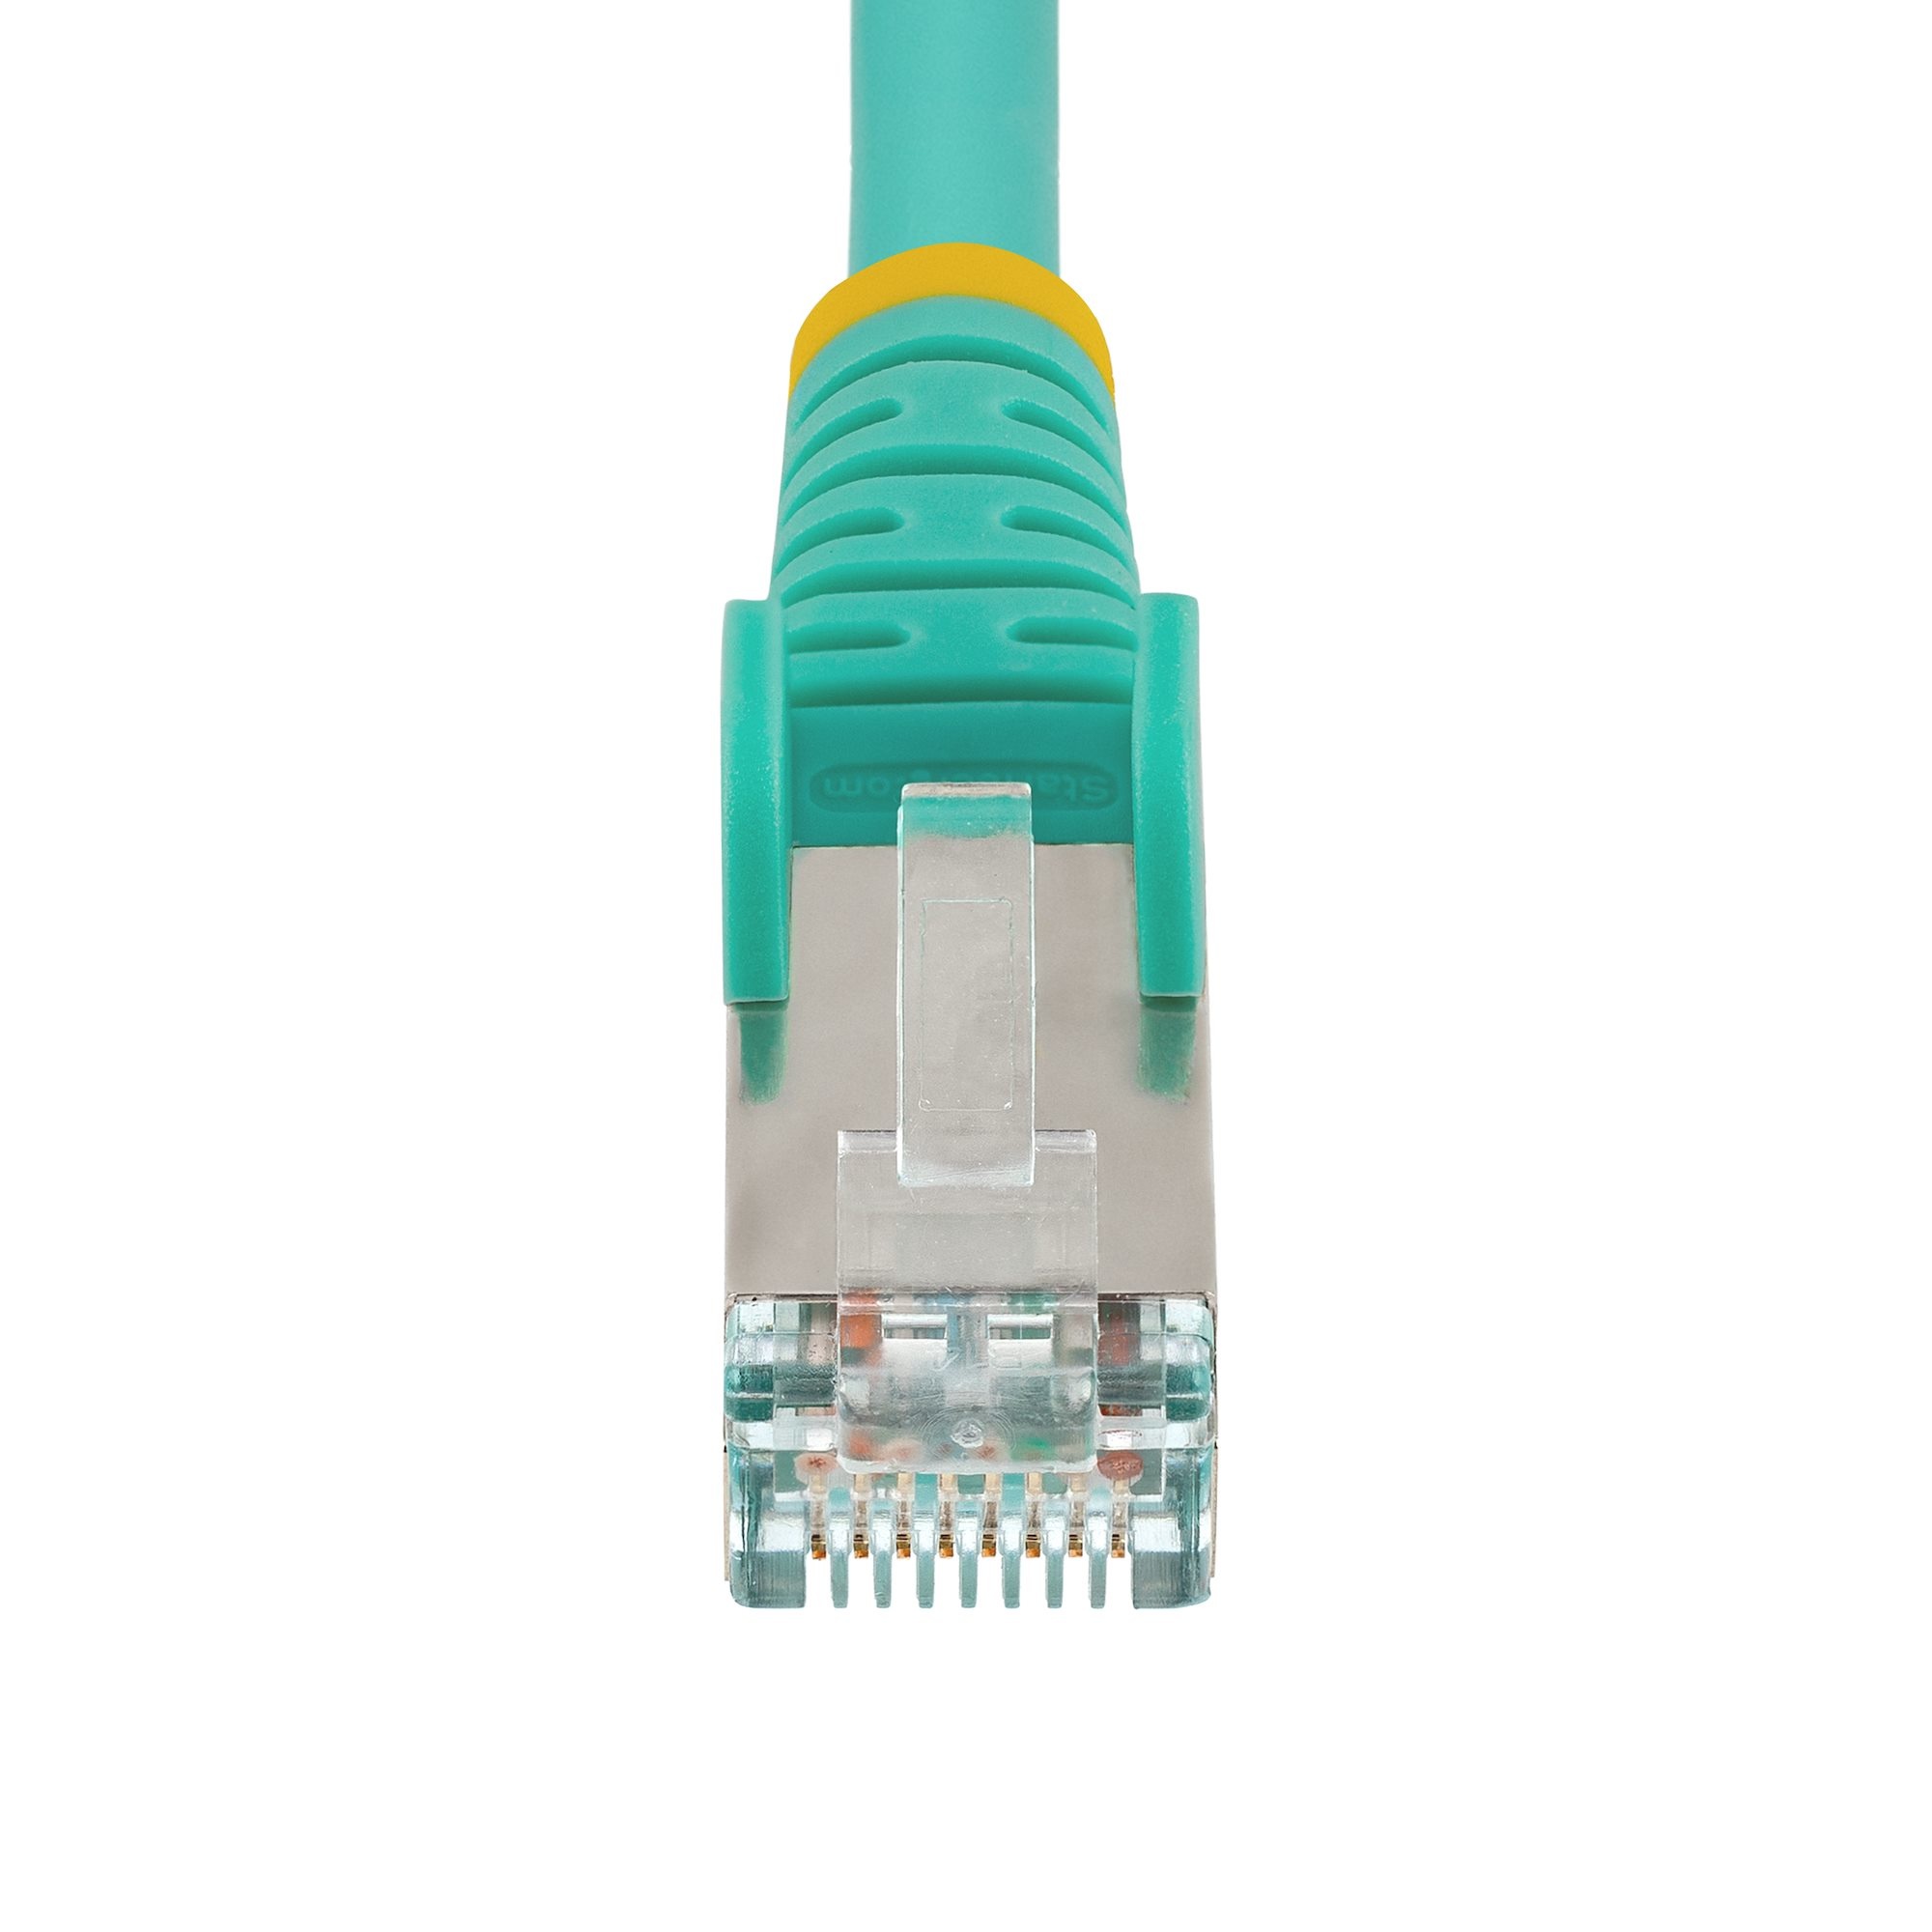 2m LSZH CAT6a Ethernet Cable - Aqua thumbnail